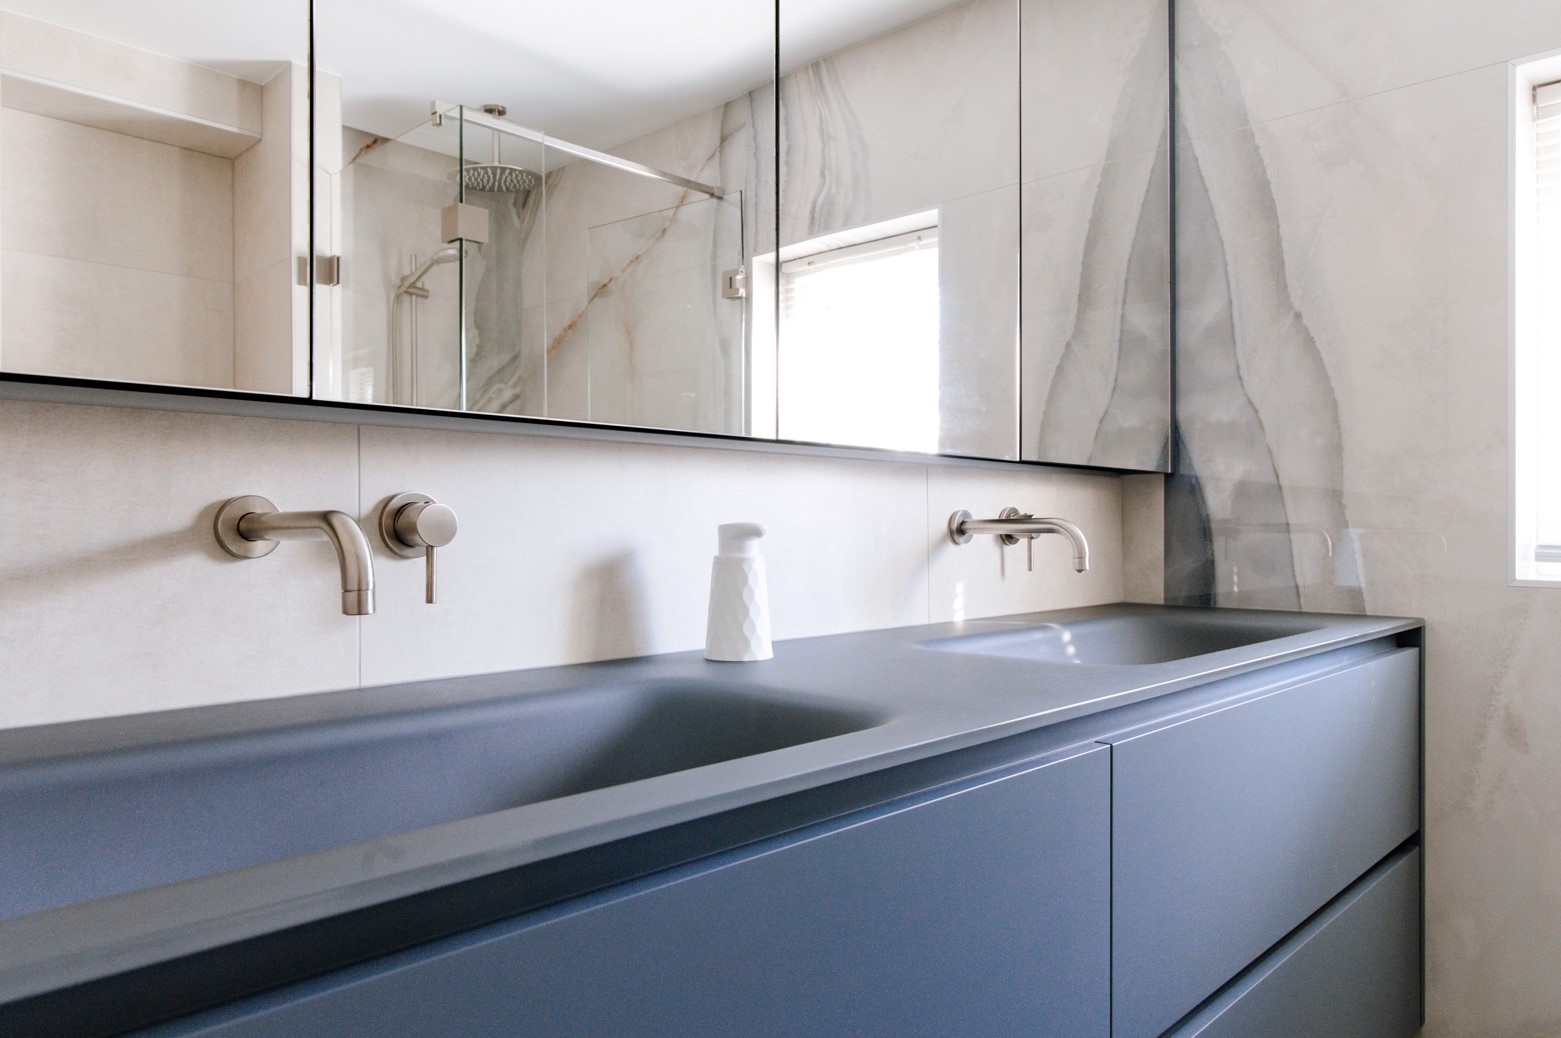 Foto : Project: luxe en compacte badkamer | Luca Sanitair